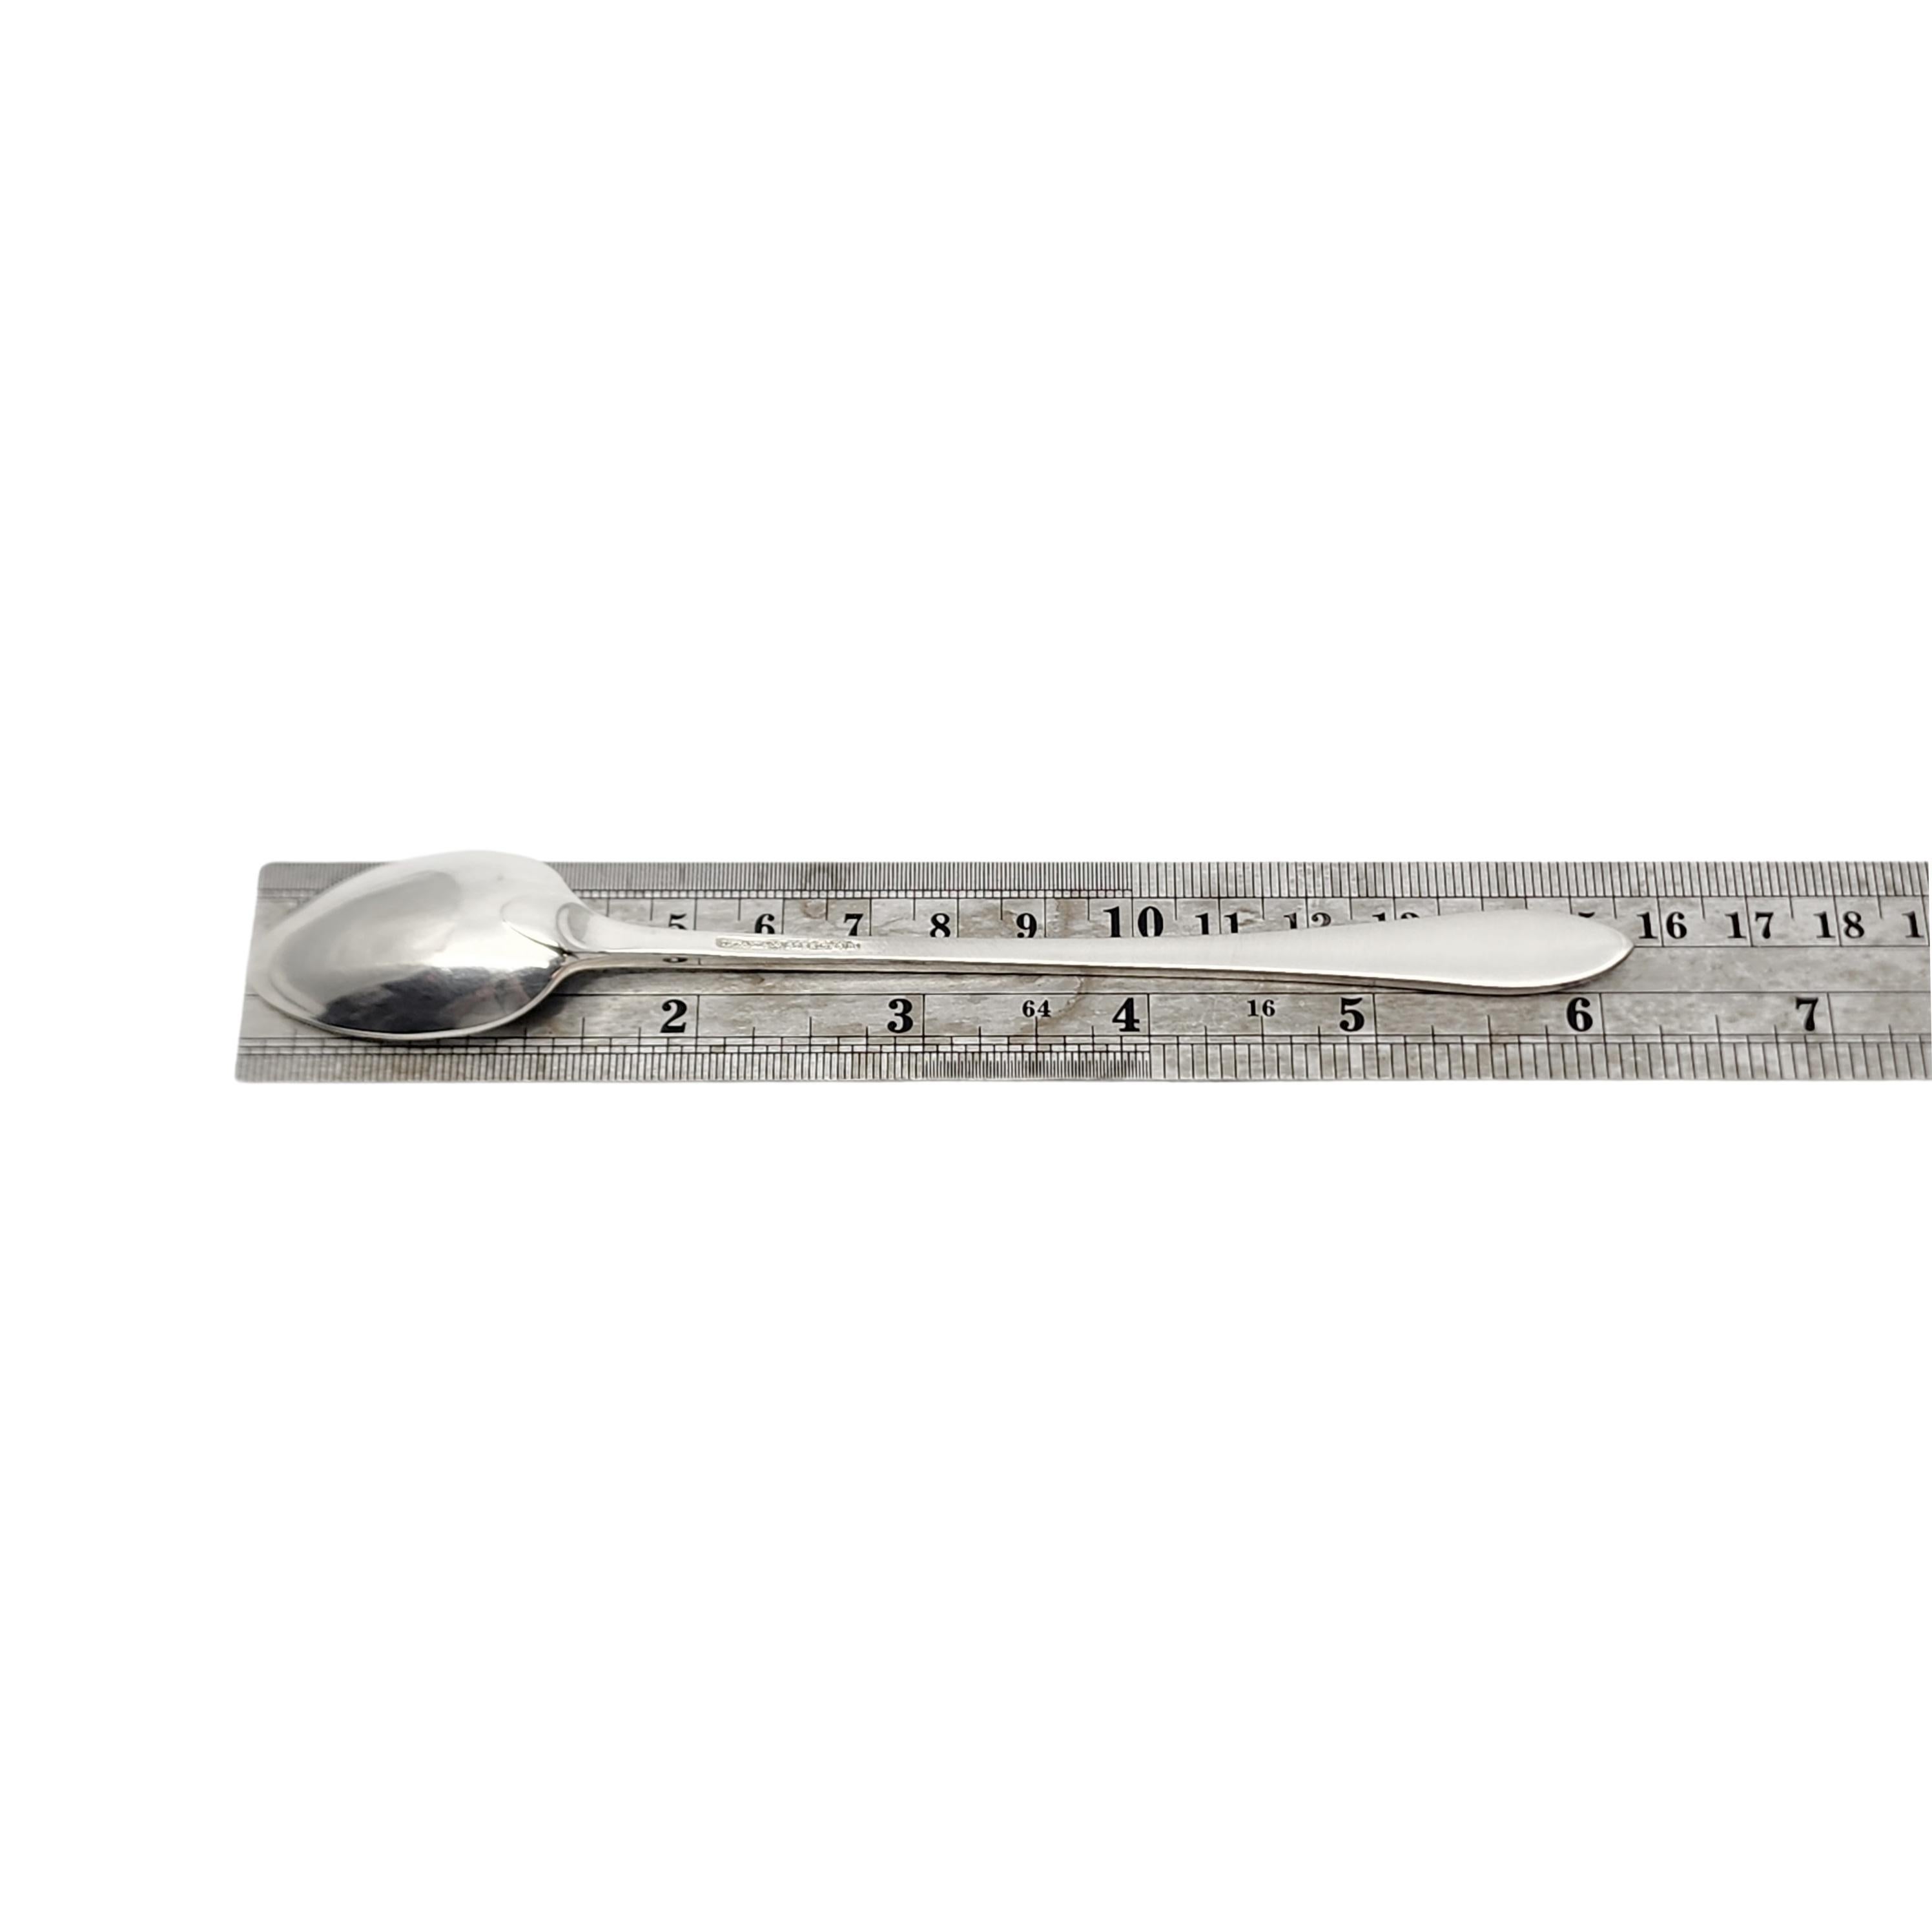 Tiffany & Co Faneuil Sterling Silver Baby Feeding Spoon #15489 3